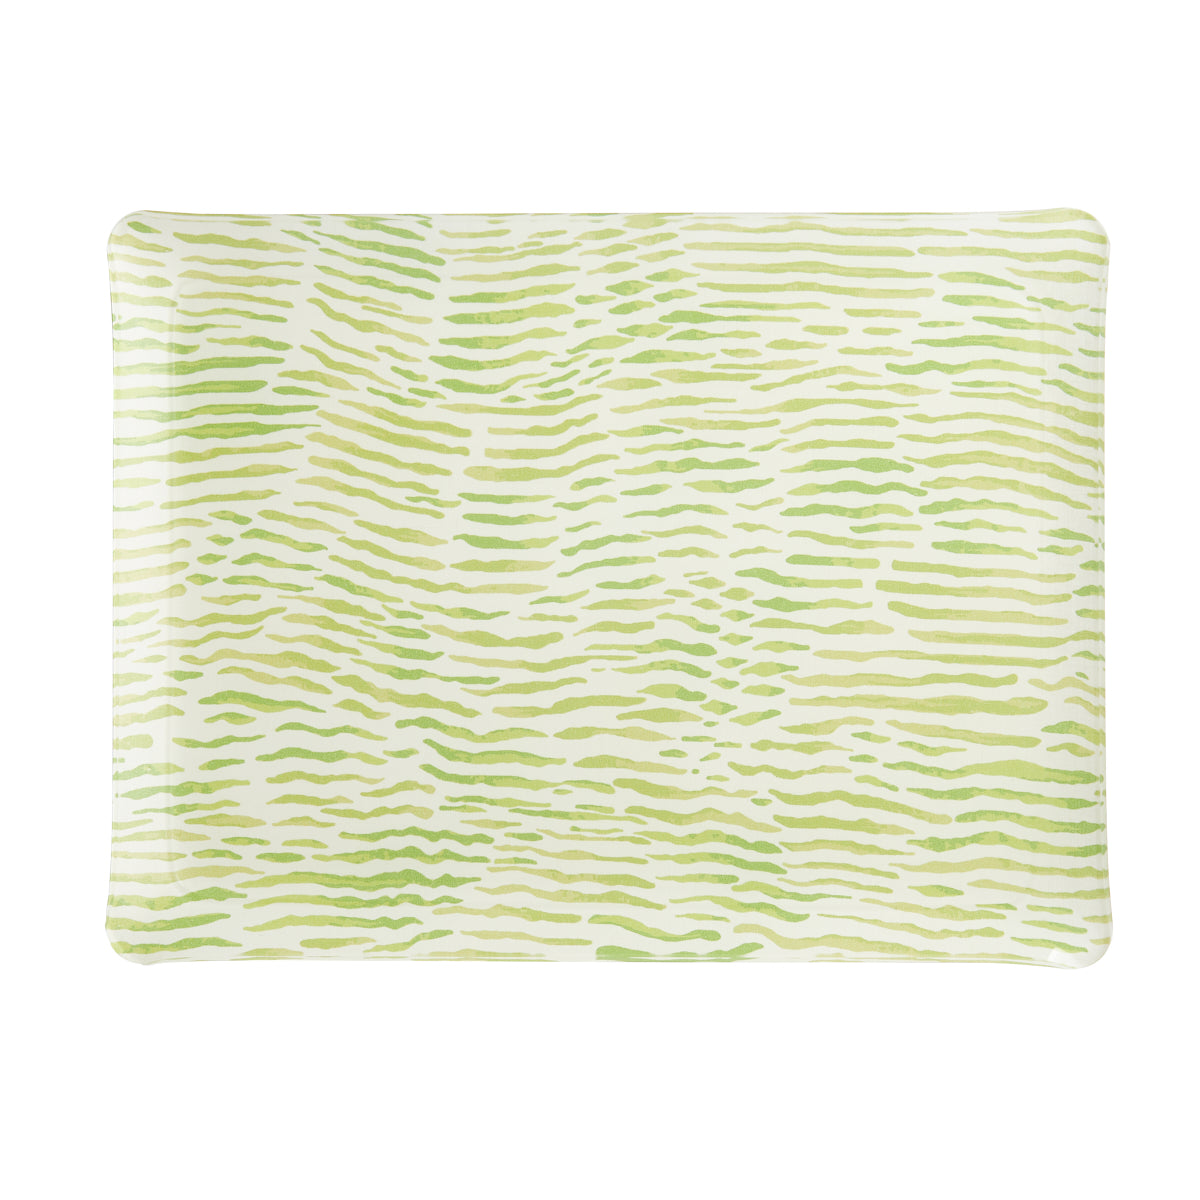 Nina Campbell Fabric Tray Medium - Arles Green